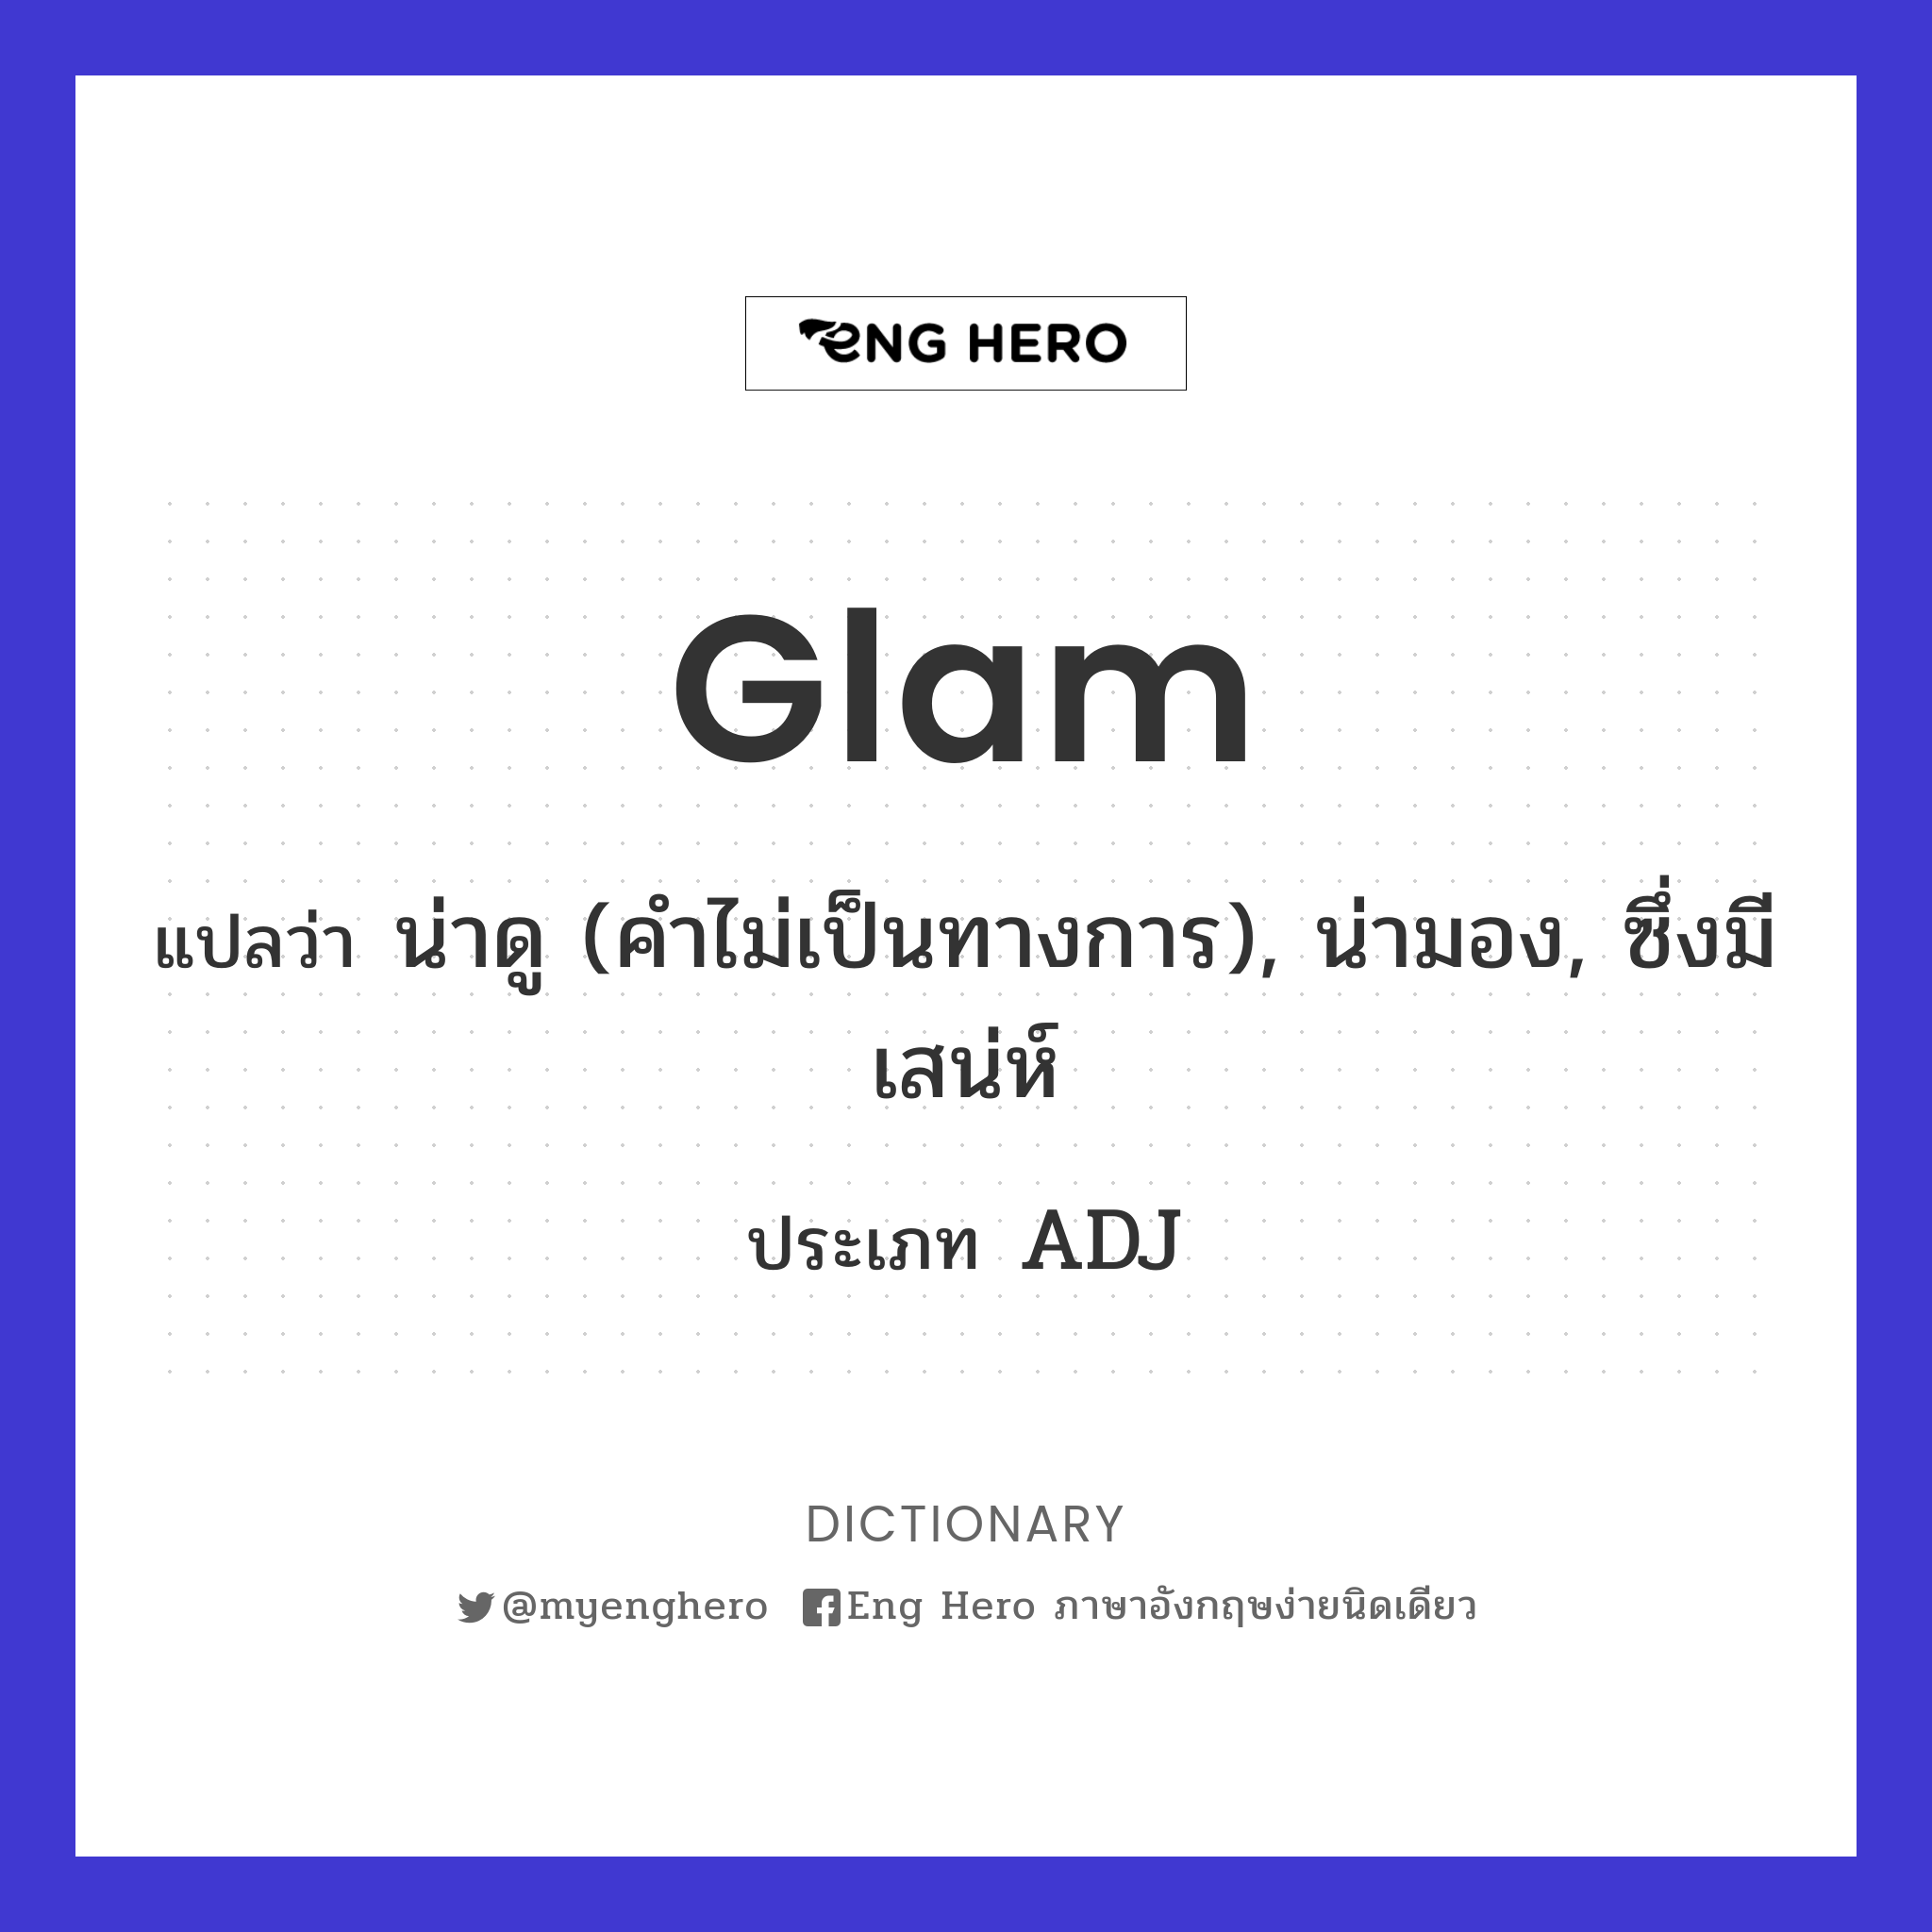 glam